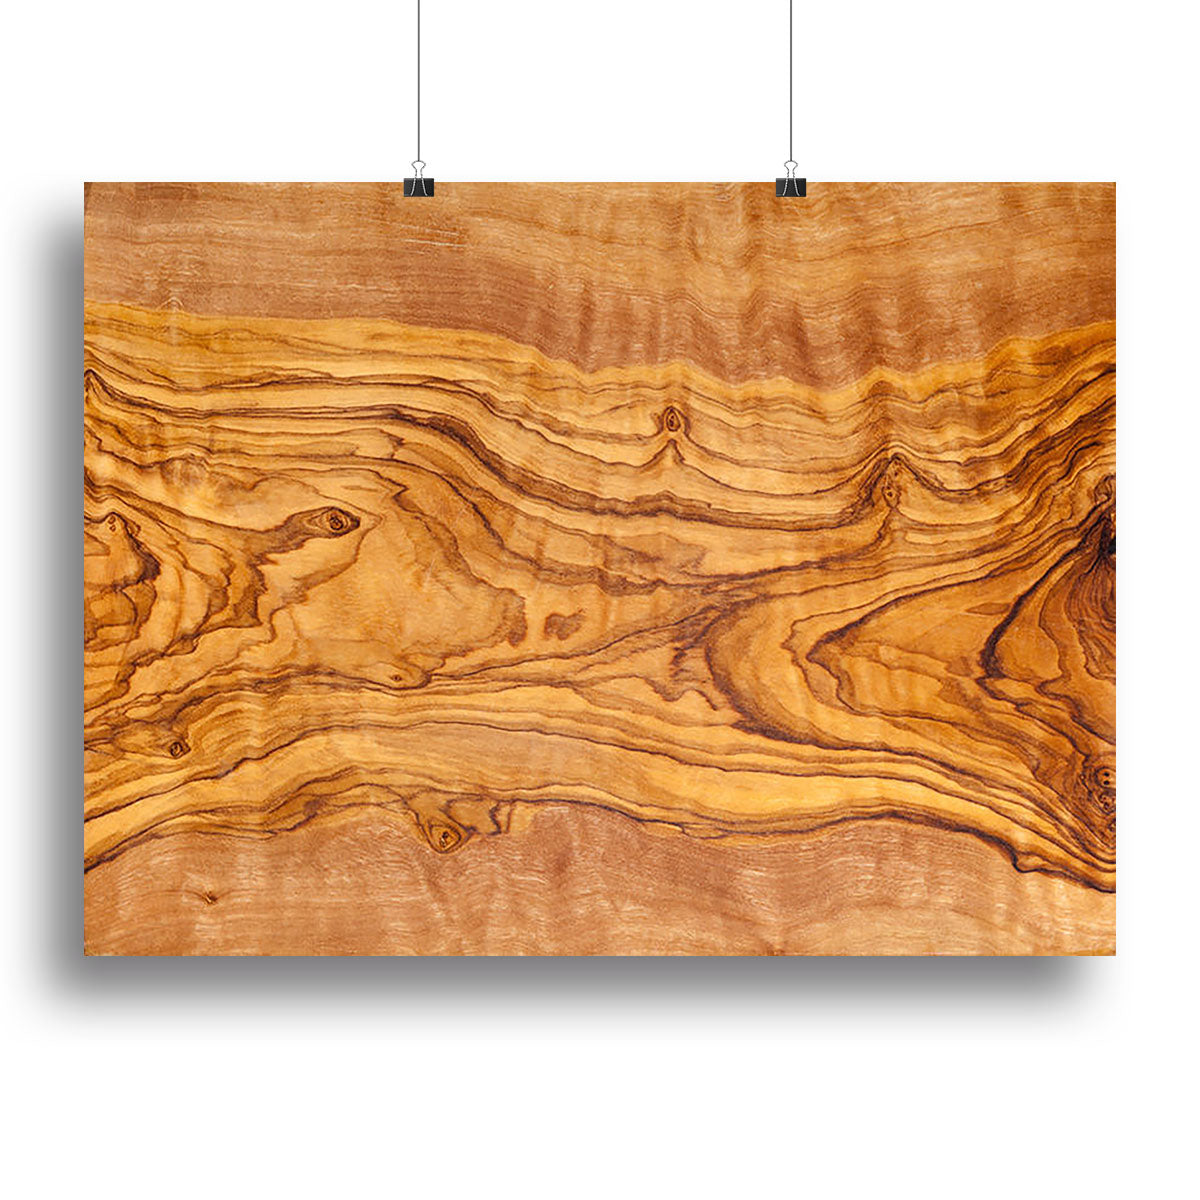 Olive tree wood slice Canvas Print or Poster - Canvas Art Rocks - 2